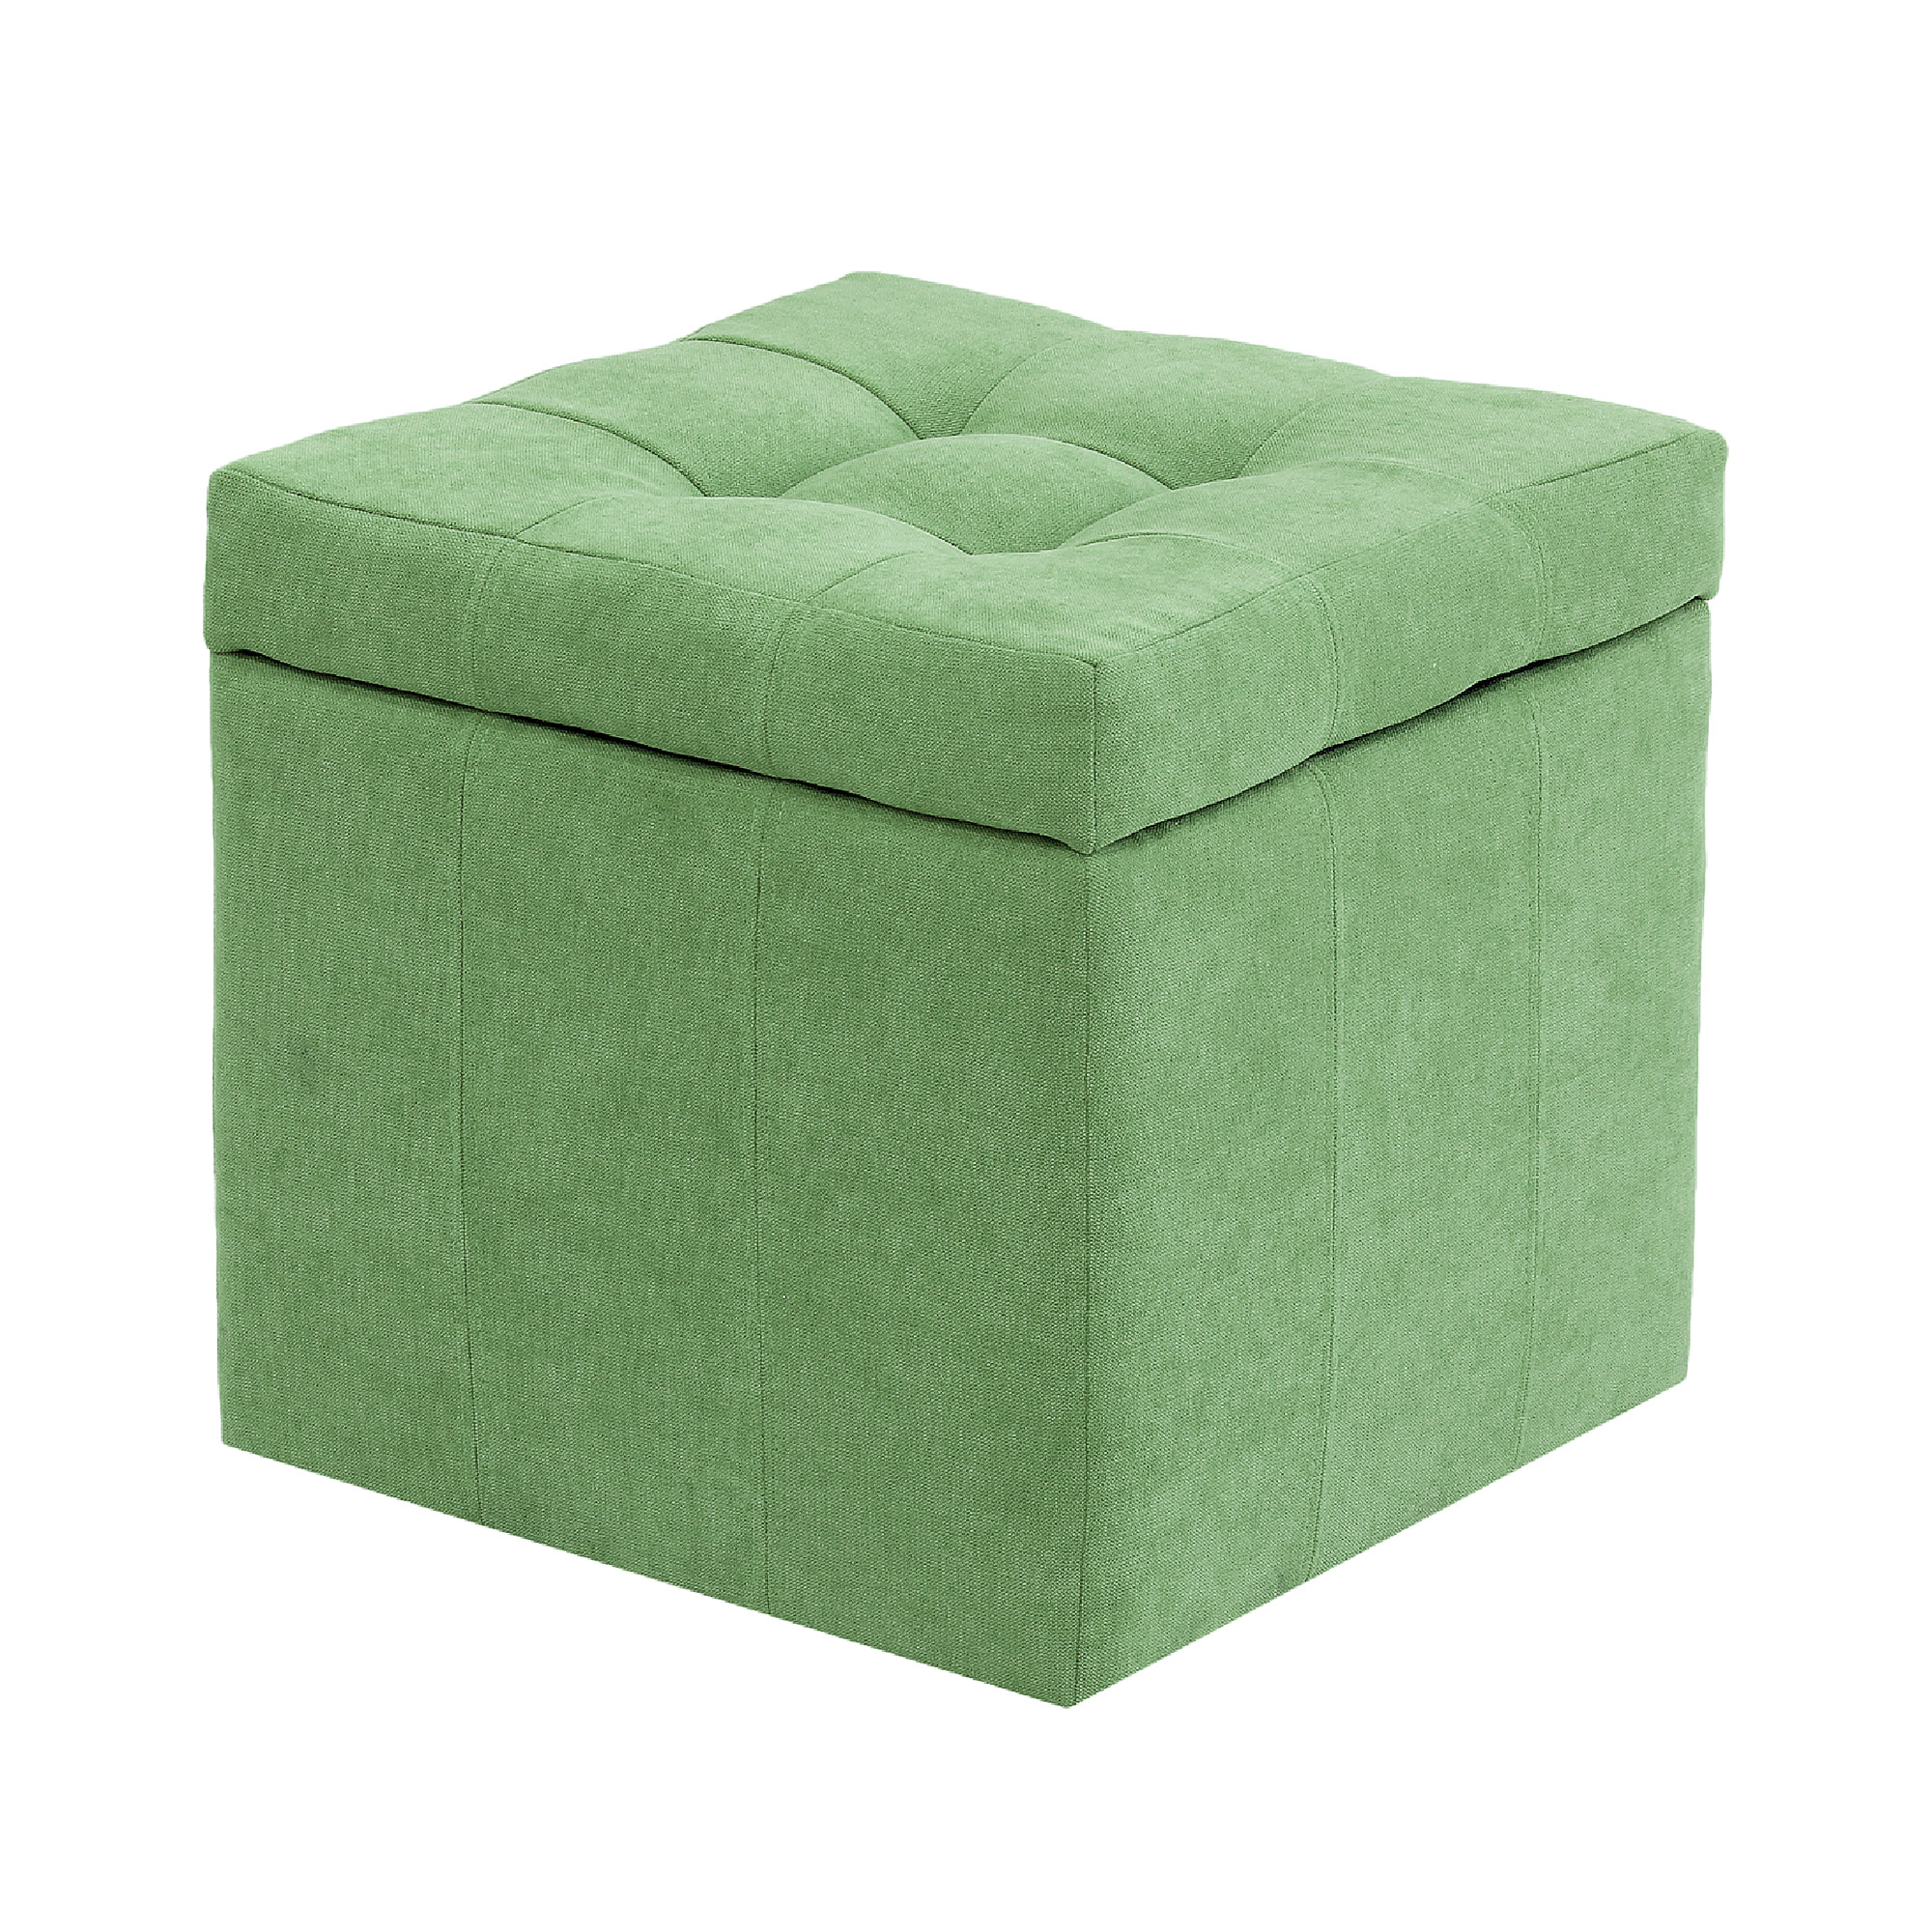 Банкетка Dreambag модерна зеленый велюр 46х46х46, размер 46х46х46 см - фото 1